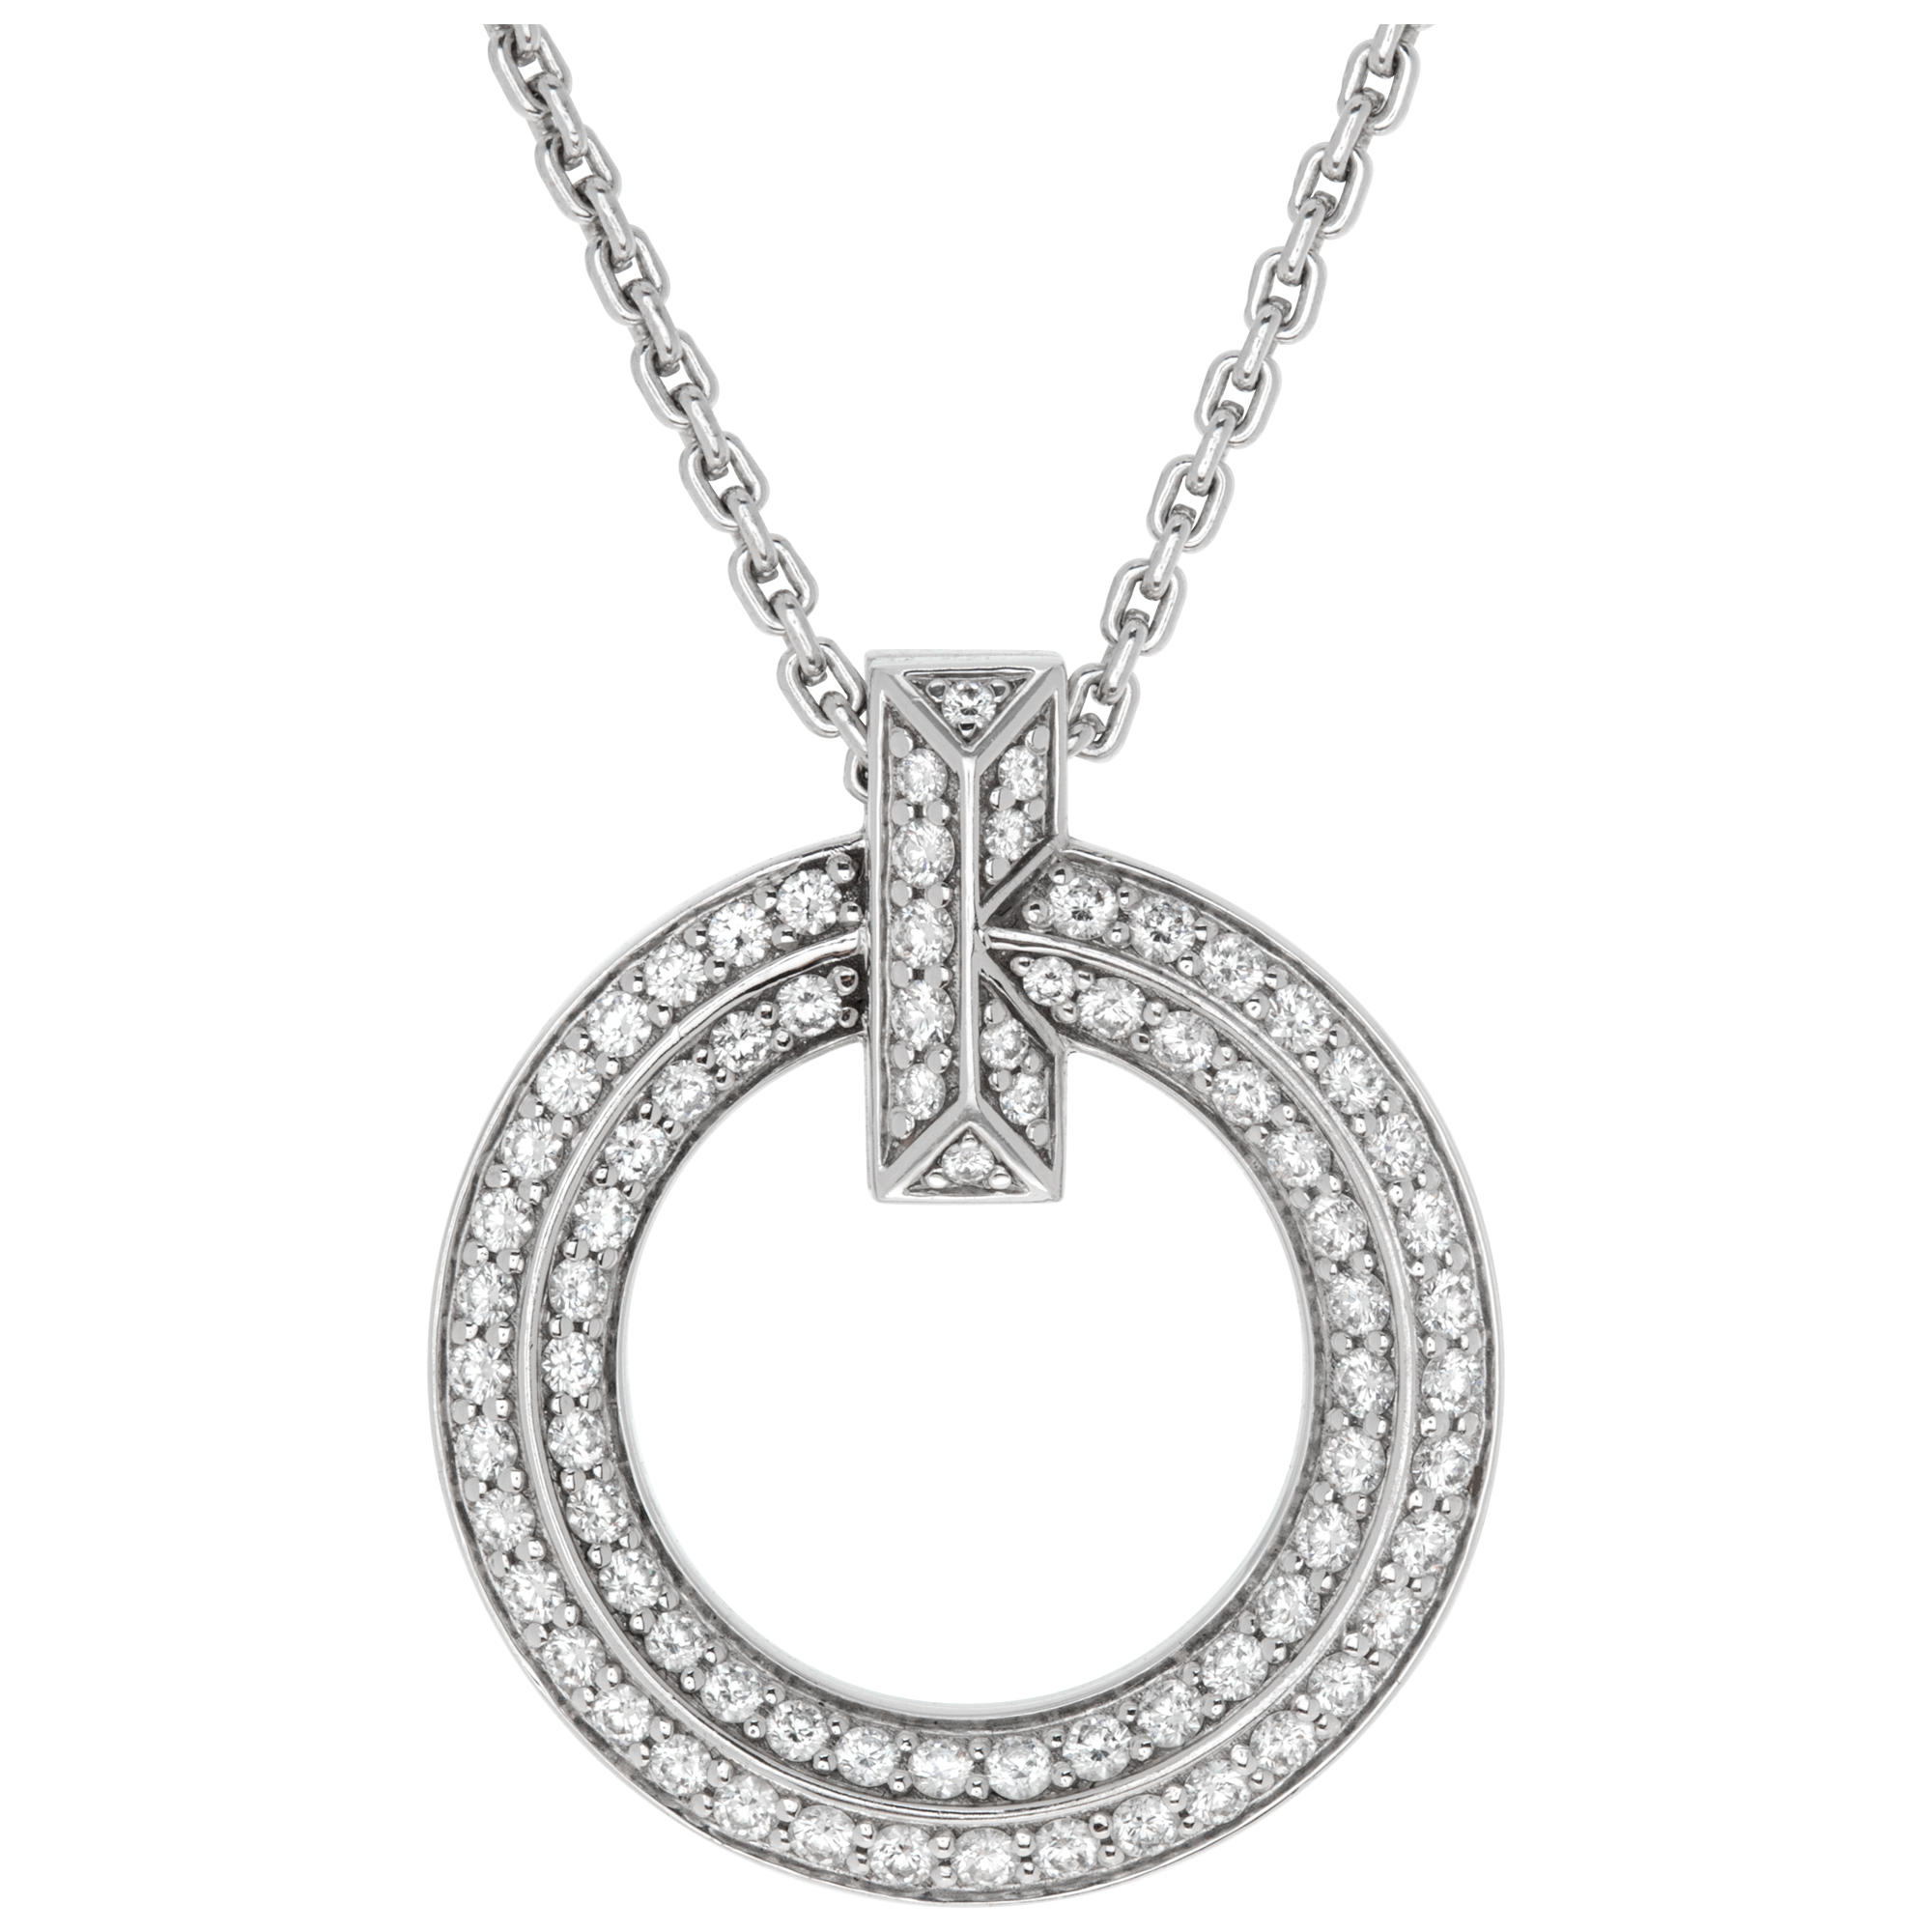 Tiffany T1 Circle Pendant in 18k white gold with round brilliant diamonds